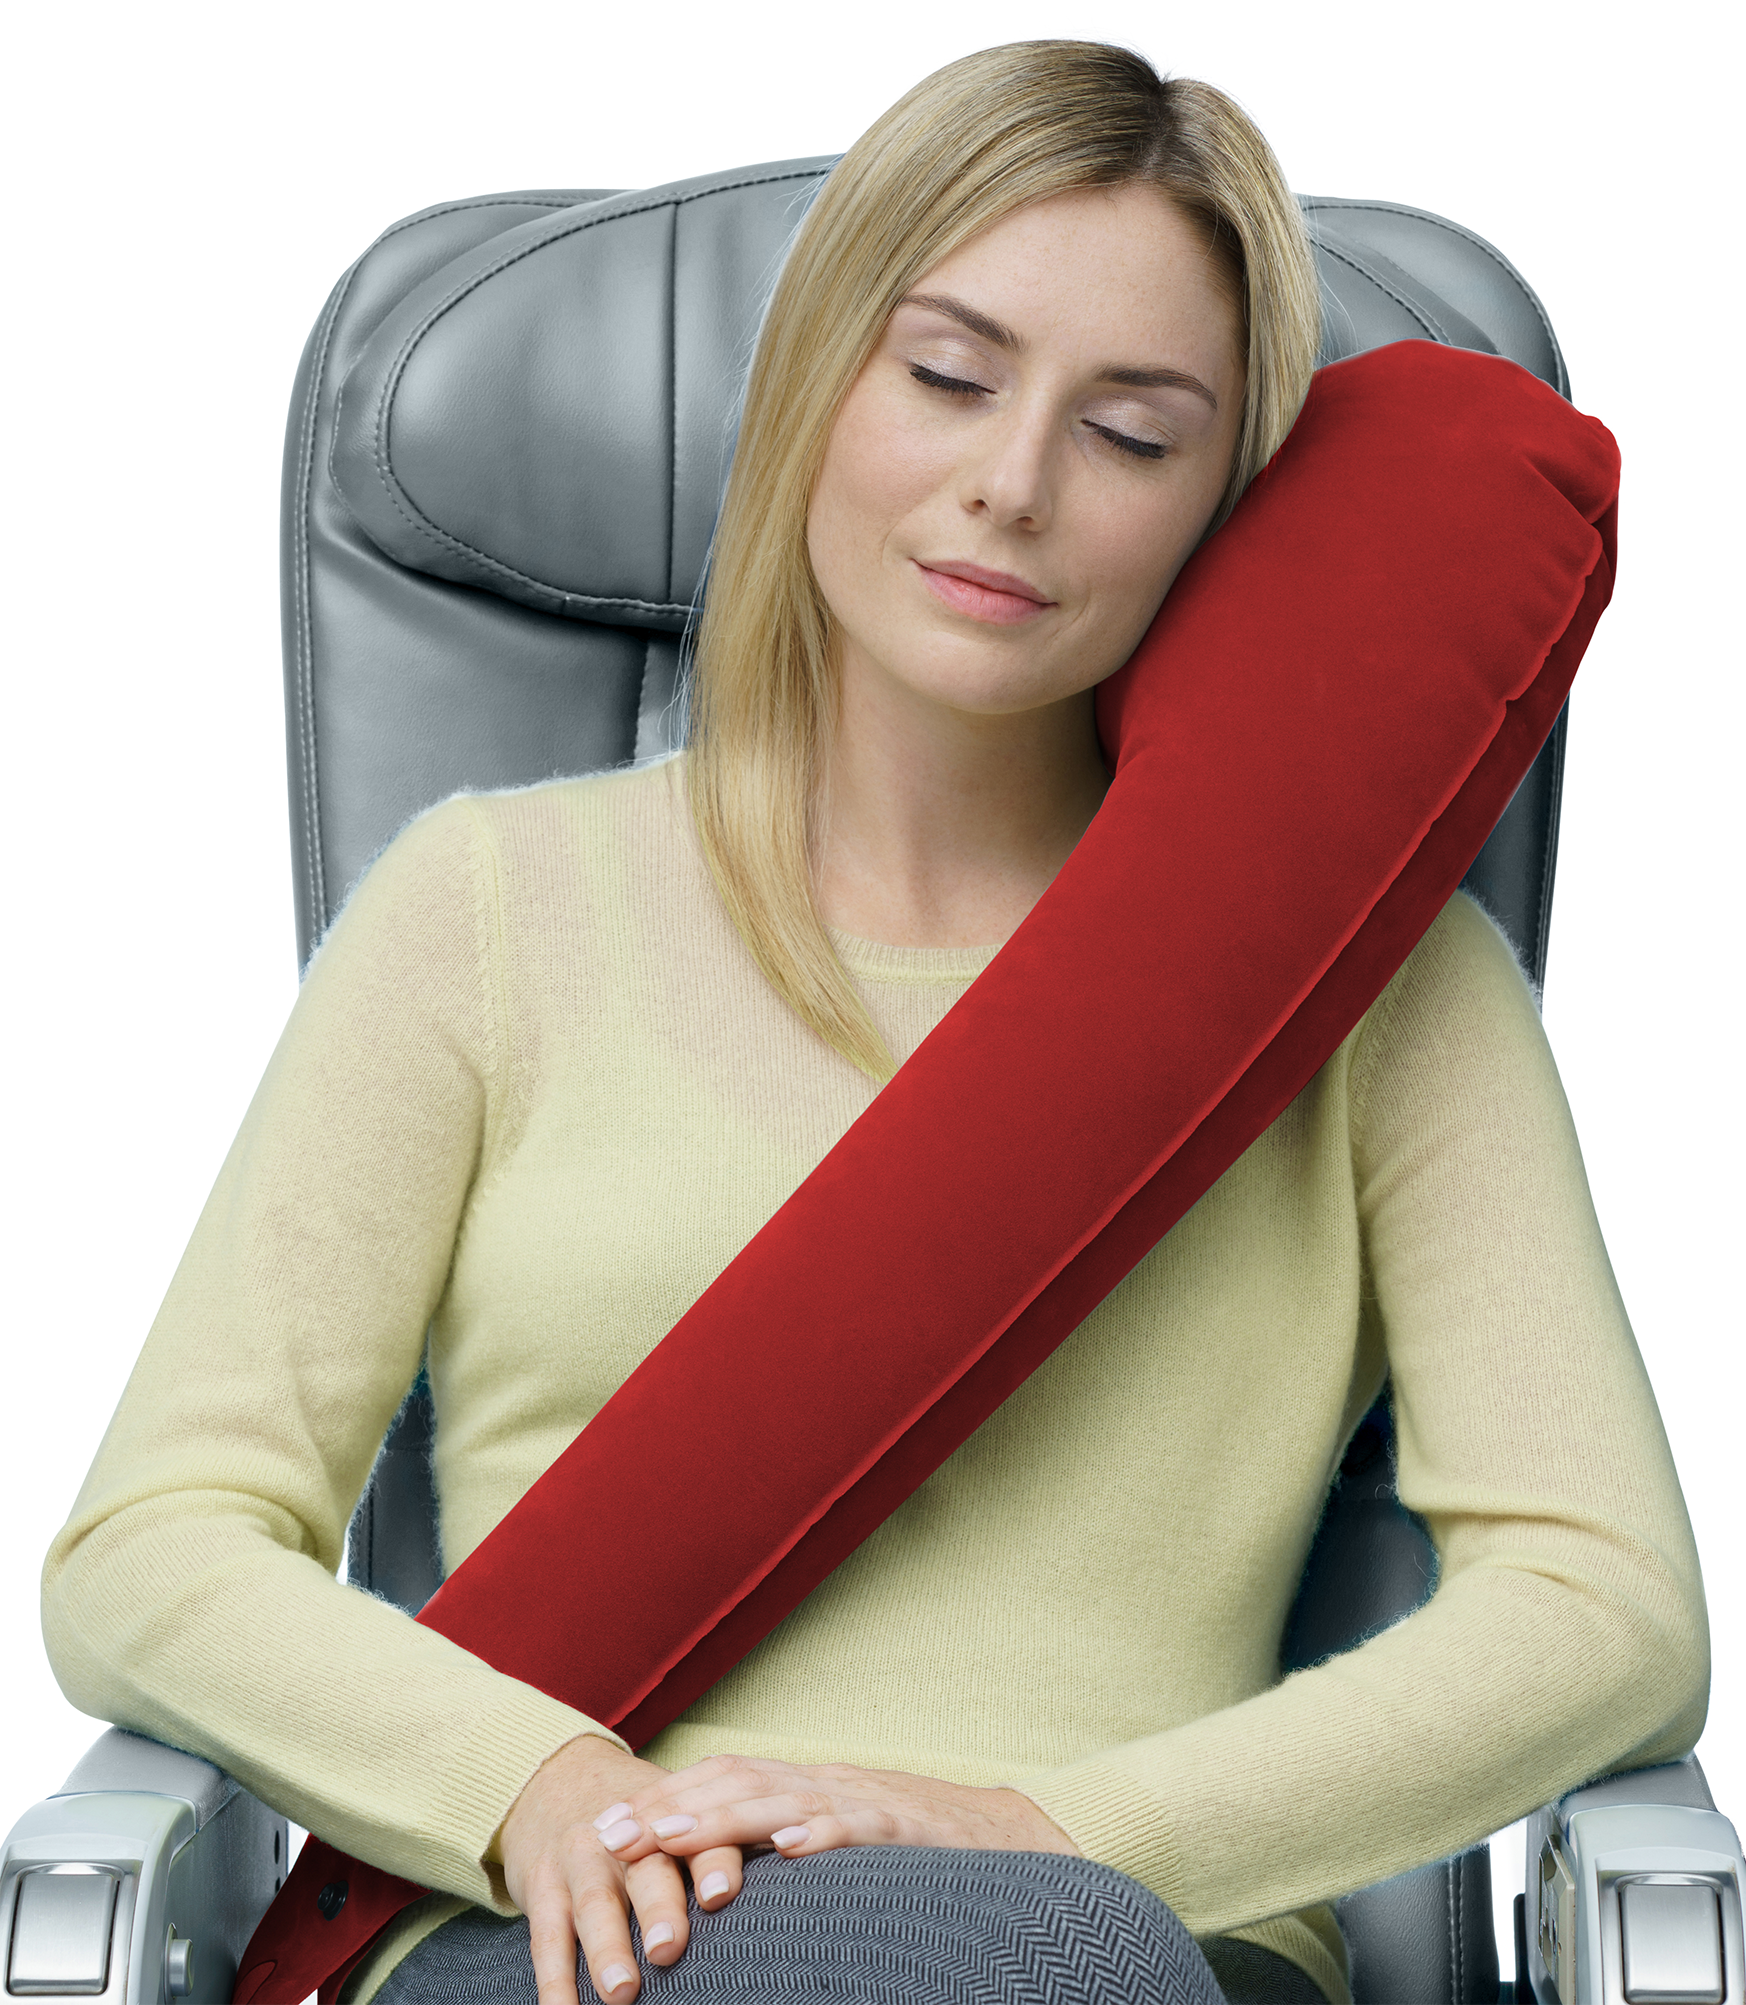 Travelrest Nest Ultimate Travel Pillow: Neck Support for Great Sleep